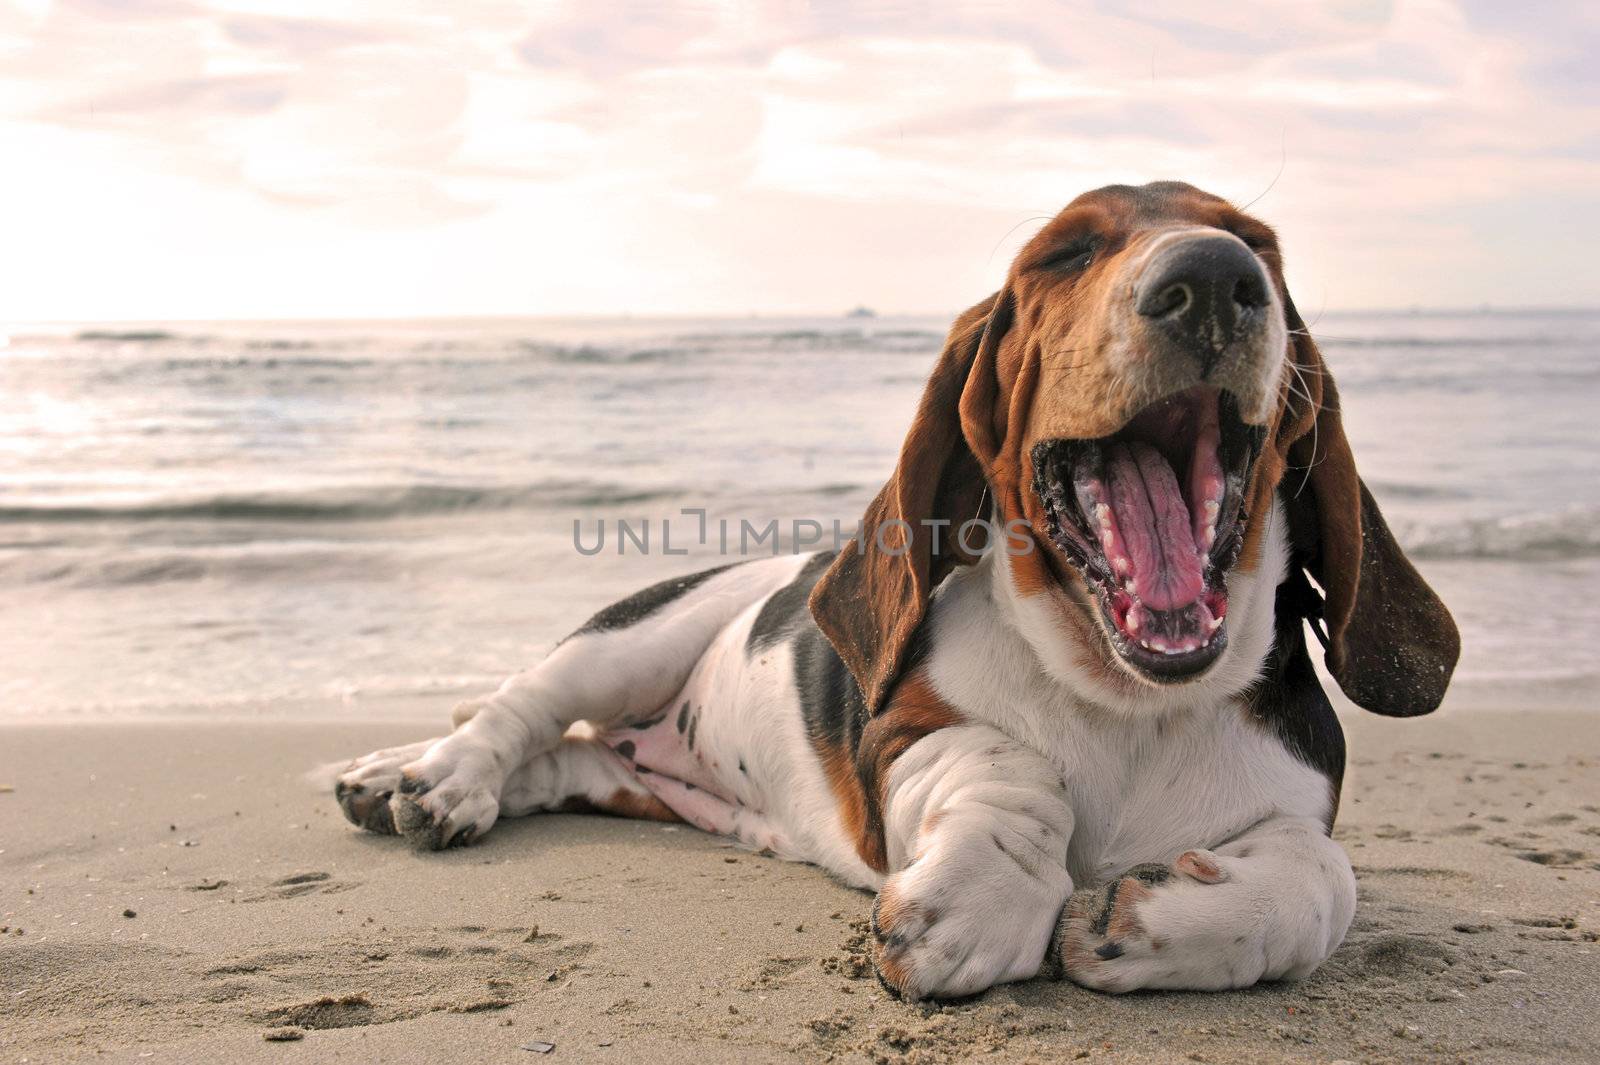 yawning puppy purebred basset hound on a beach